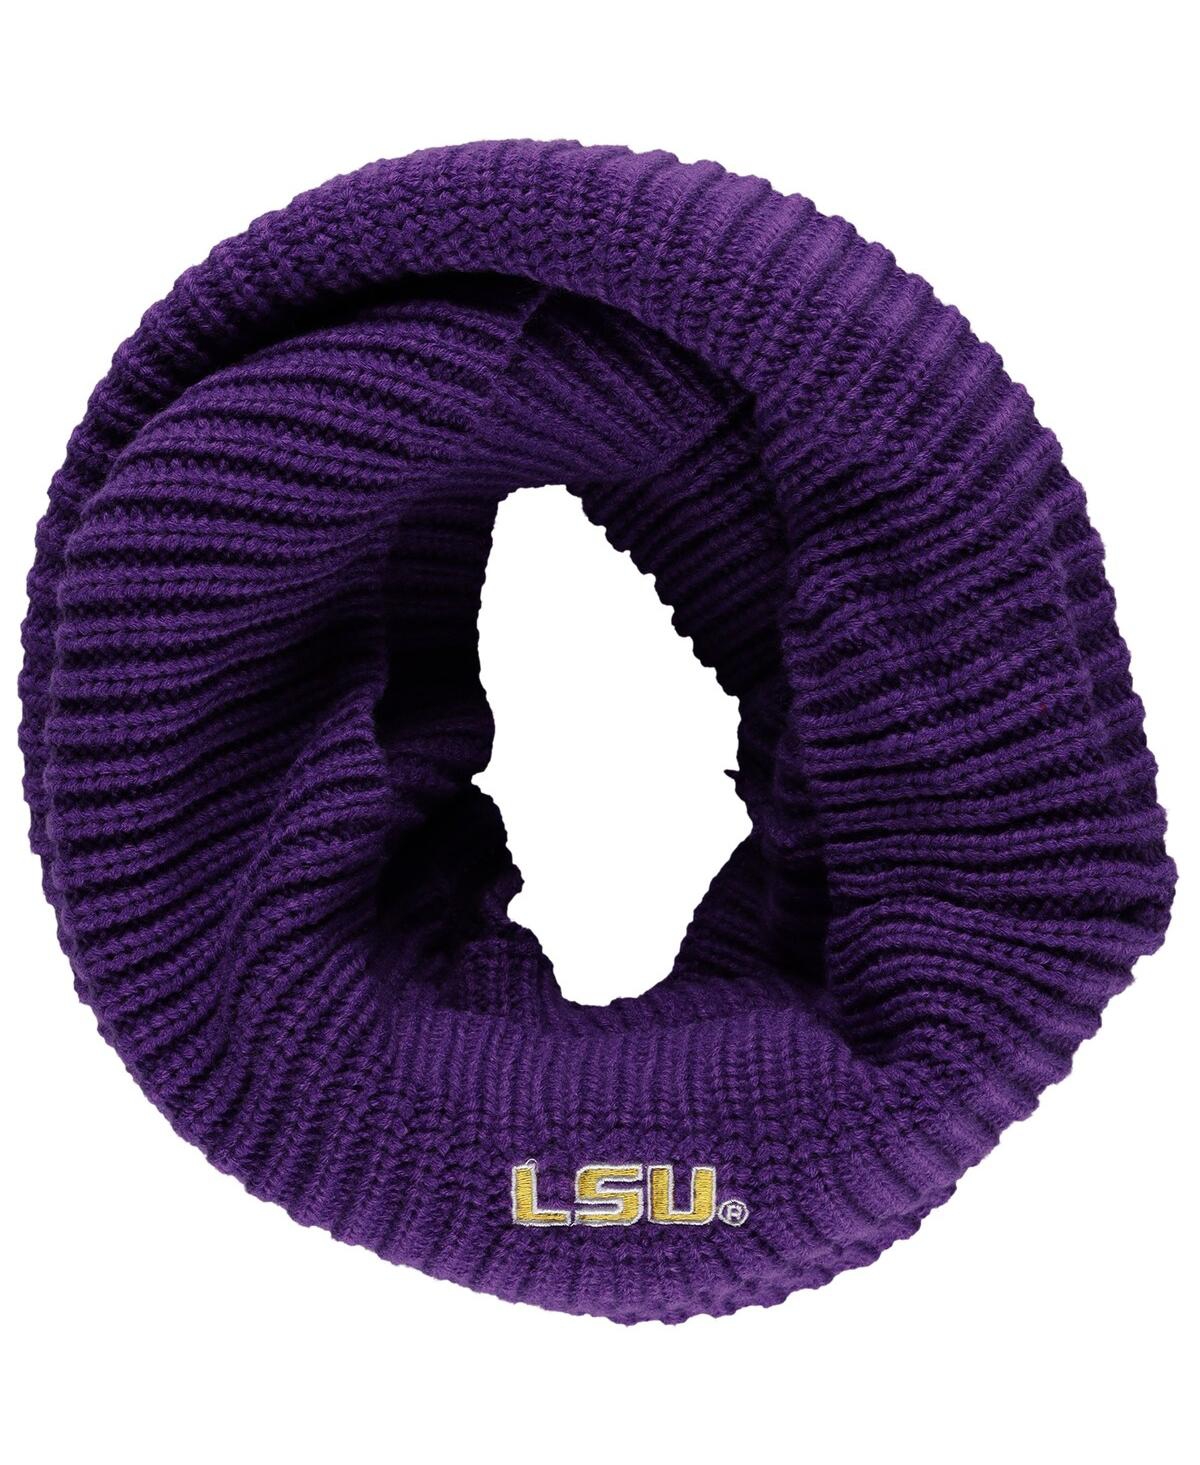 Zoozatz Women's  Lsu Tigers Knit Cowl Infinity Scarf In Purple